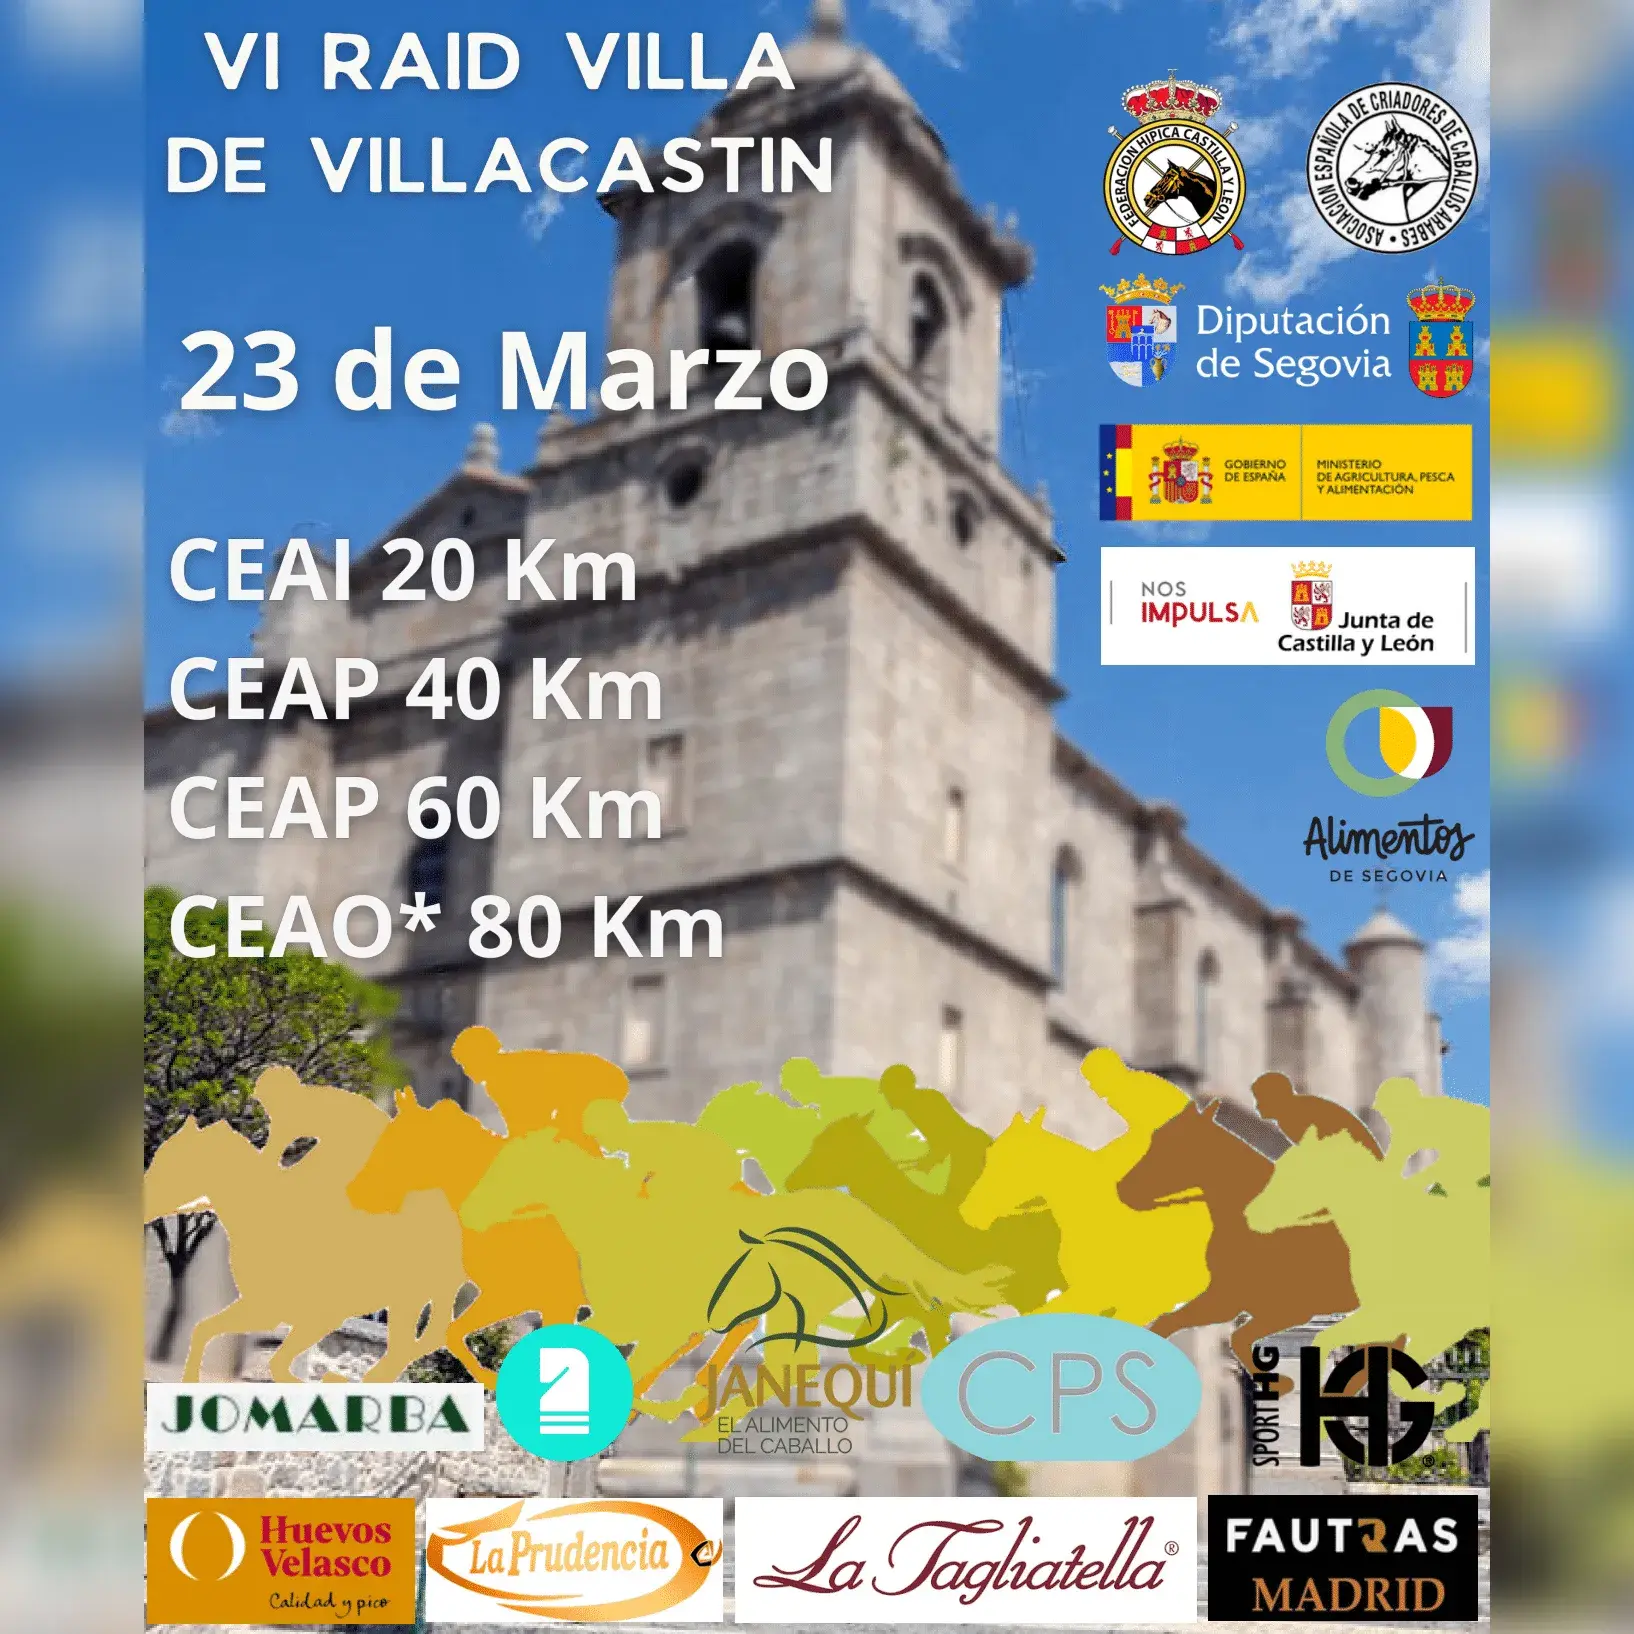 Poster of VI Raid de Villacastín